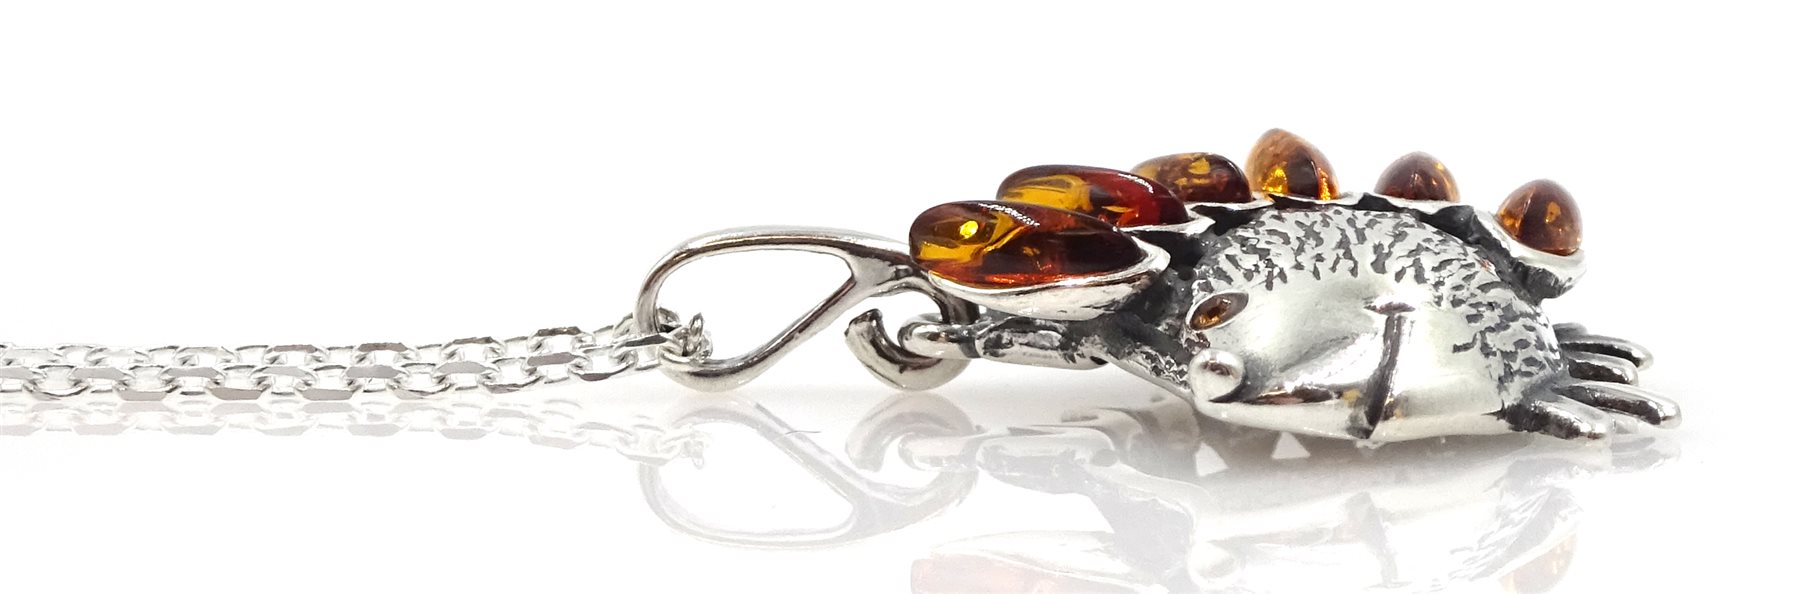 Silver amber hedgehog pendant necklace - Image 2 of 2